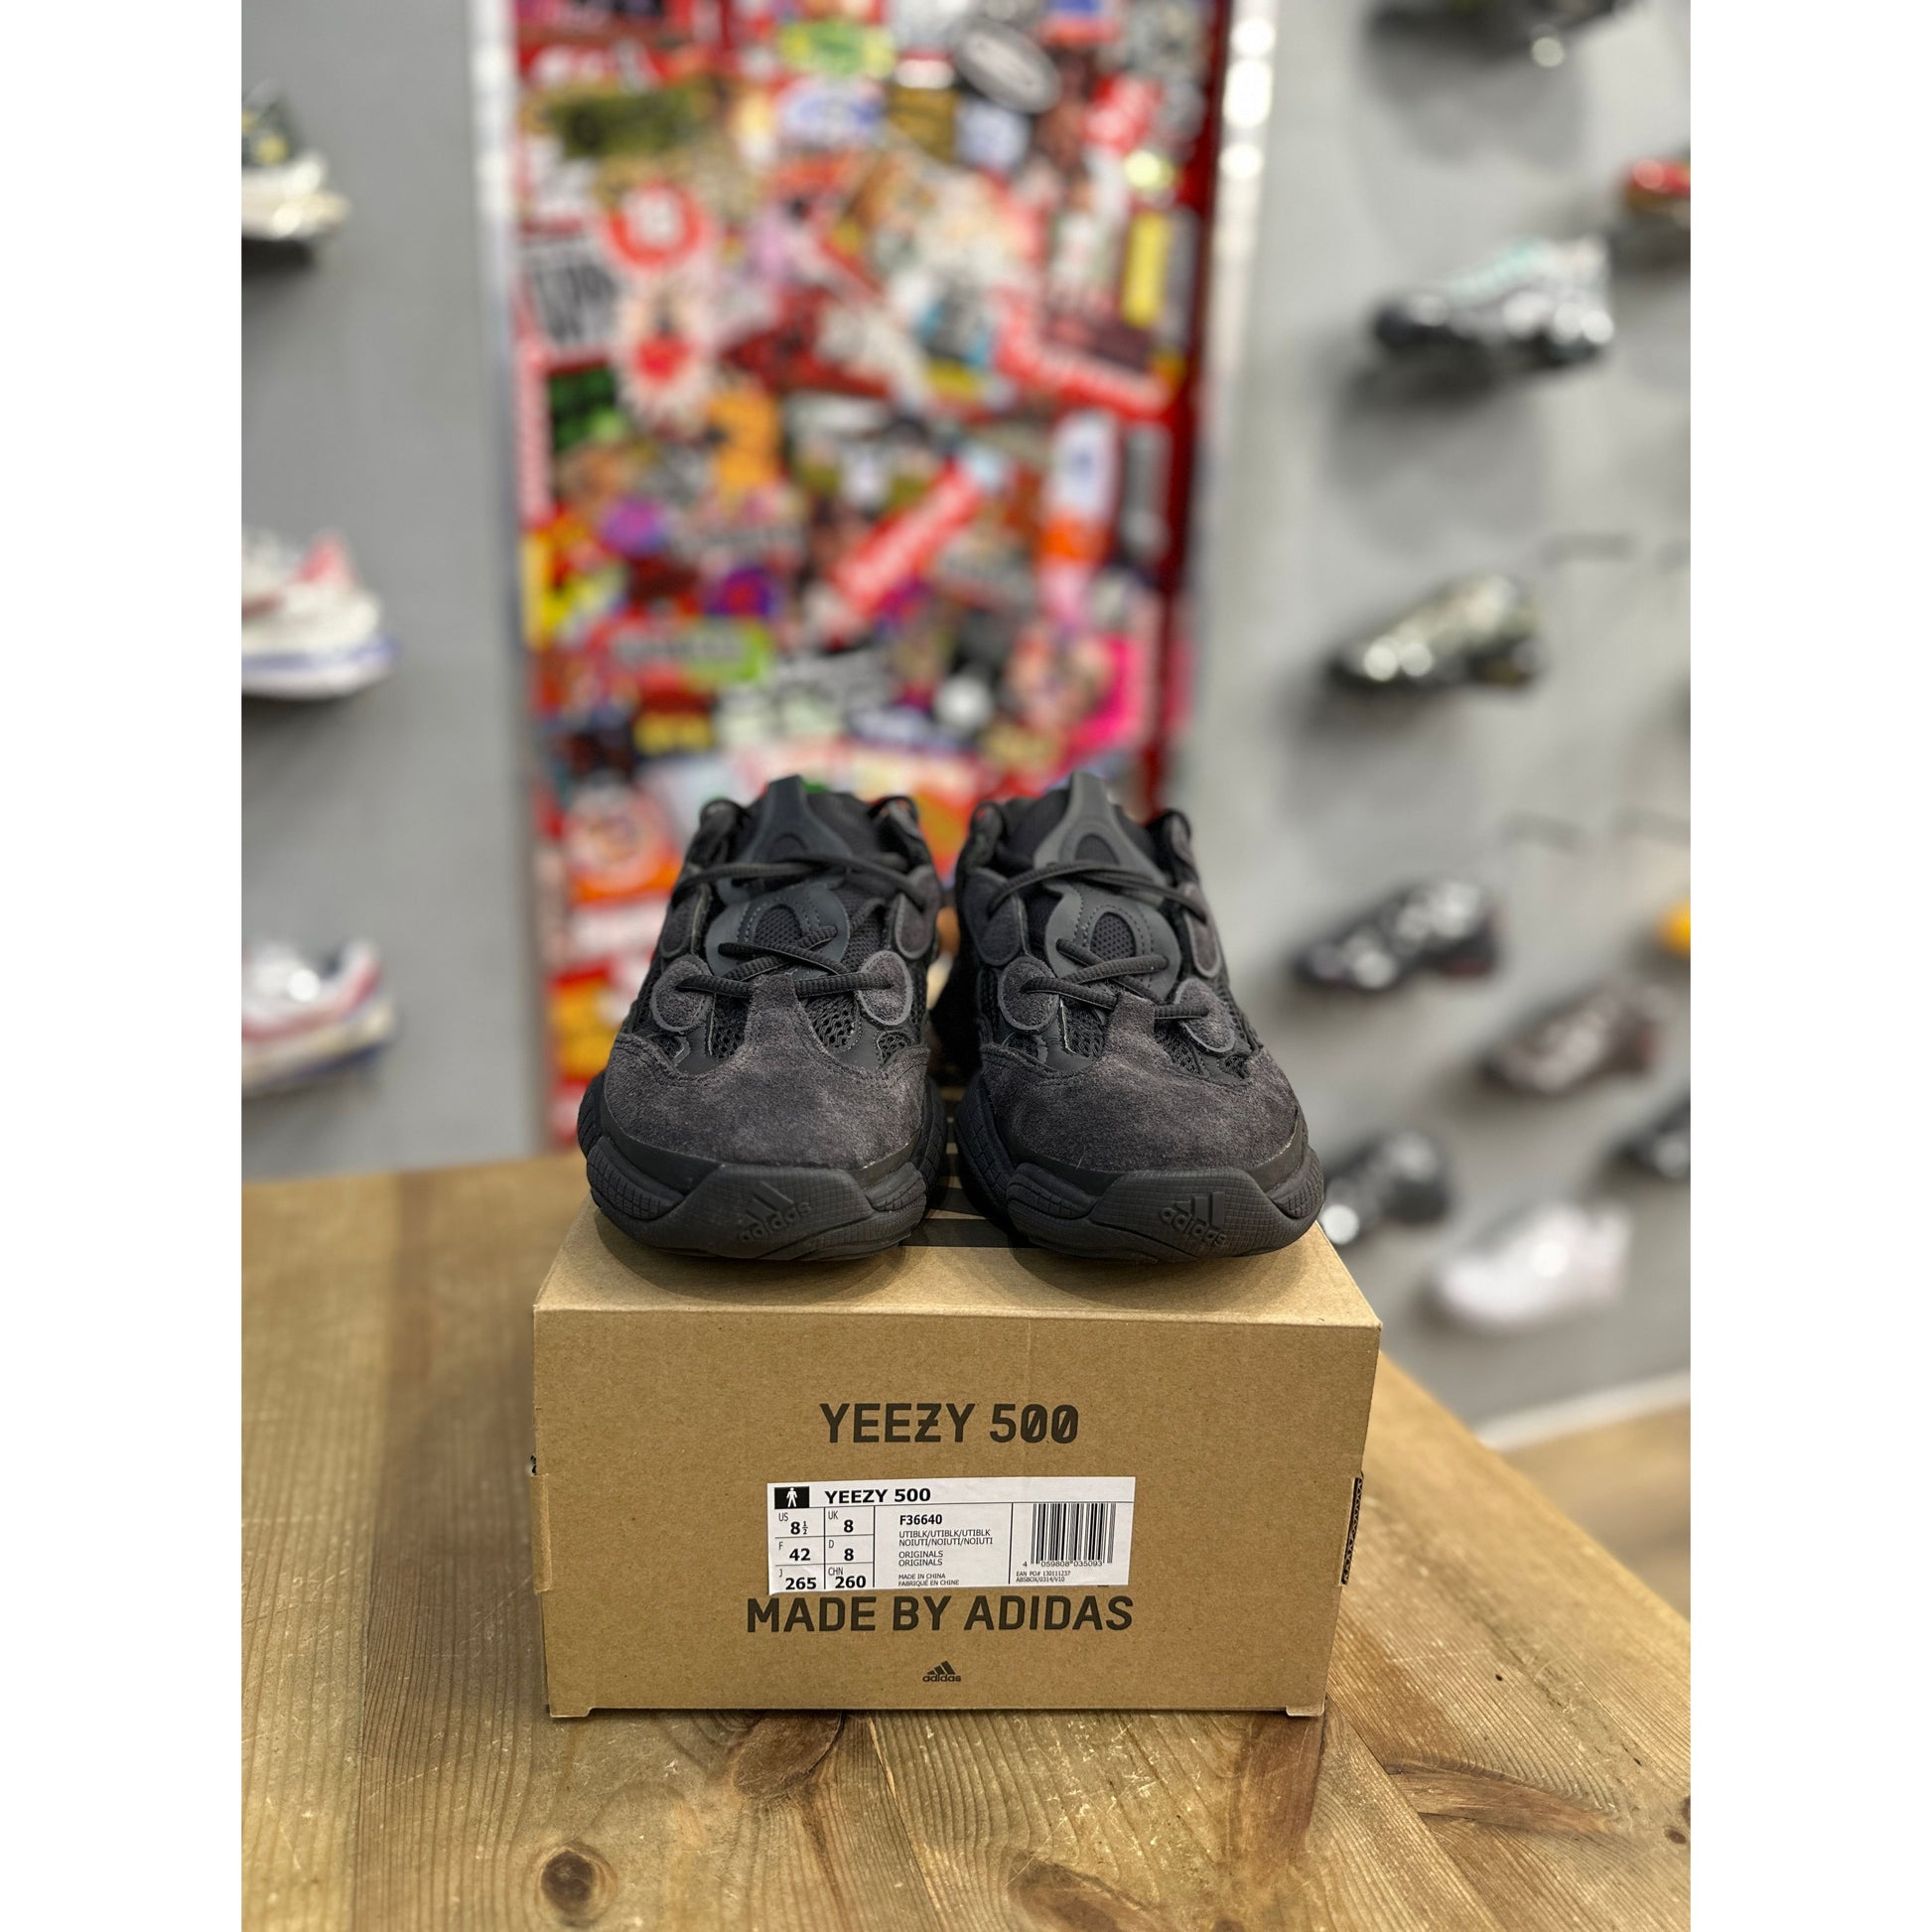 adidas Yeezy 500 Utility Black (2018/2023) UK 8 by Yeezy from £125.00